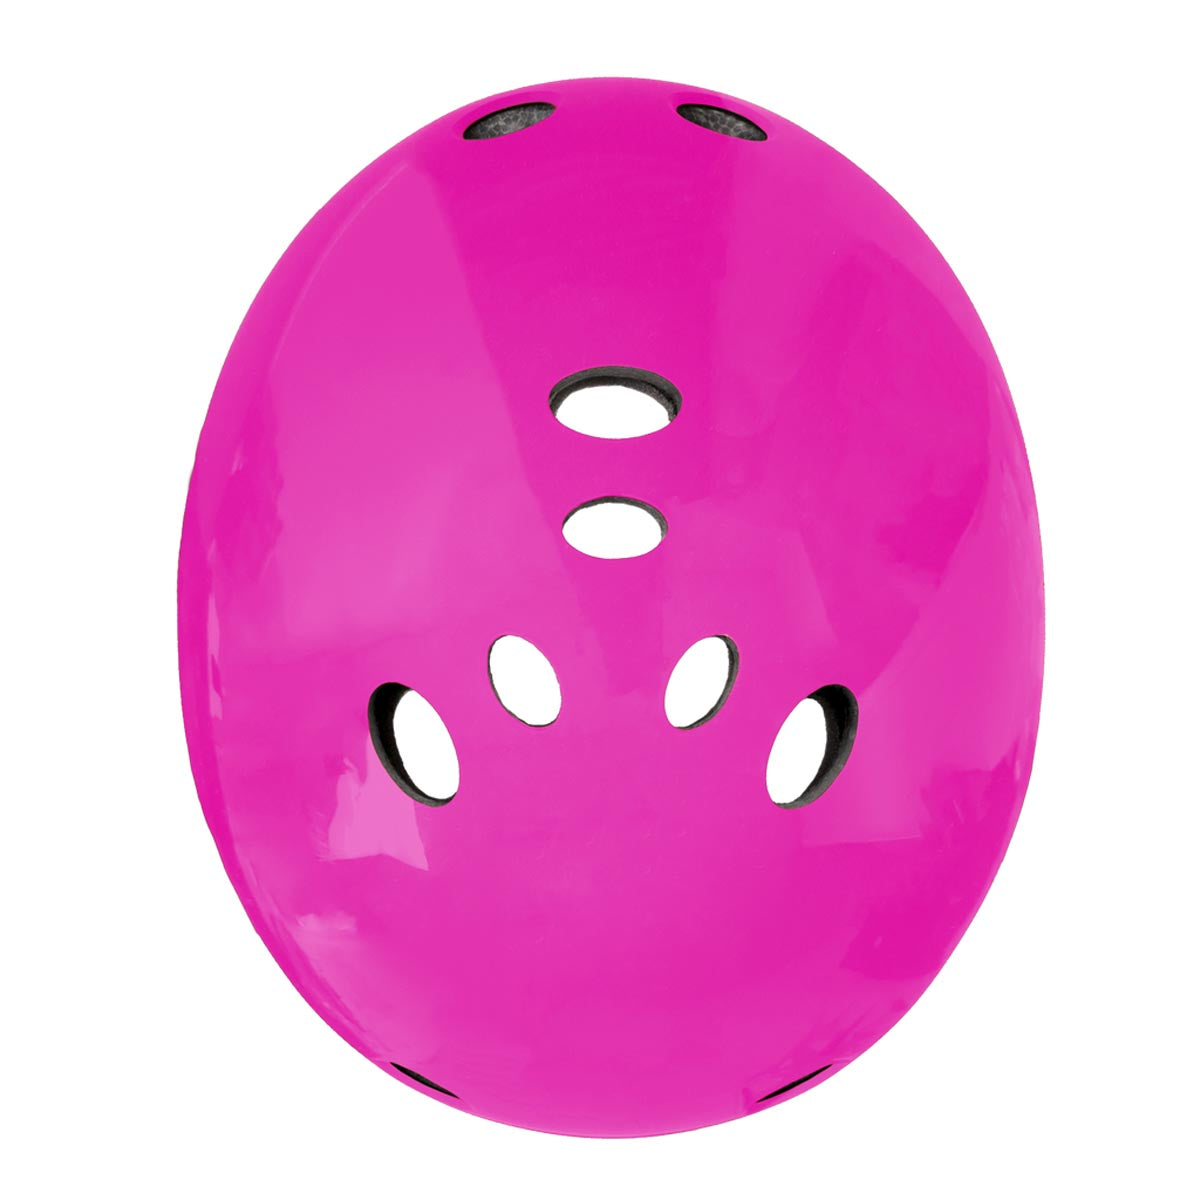 Triple Eight Certified Sweatsaver Helmet - Pink Gloss image 3